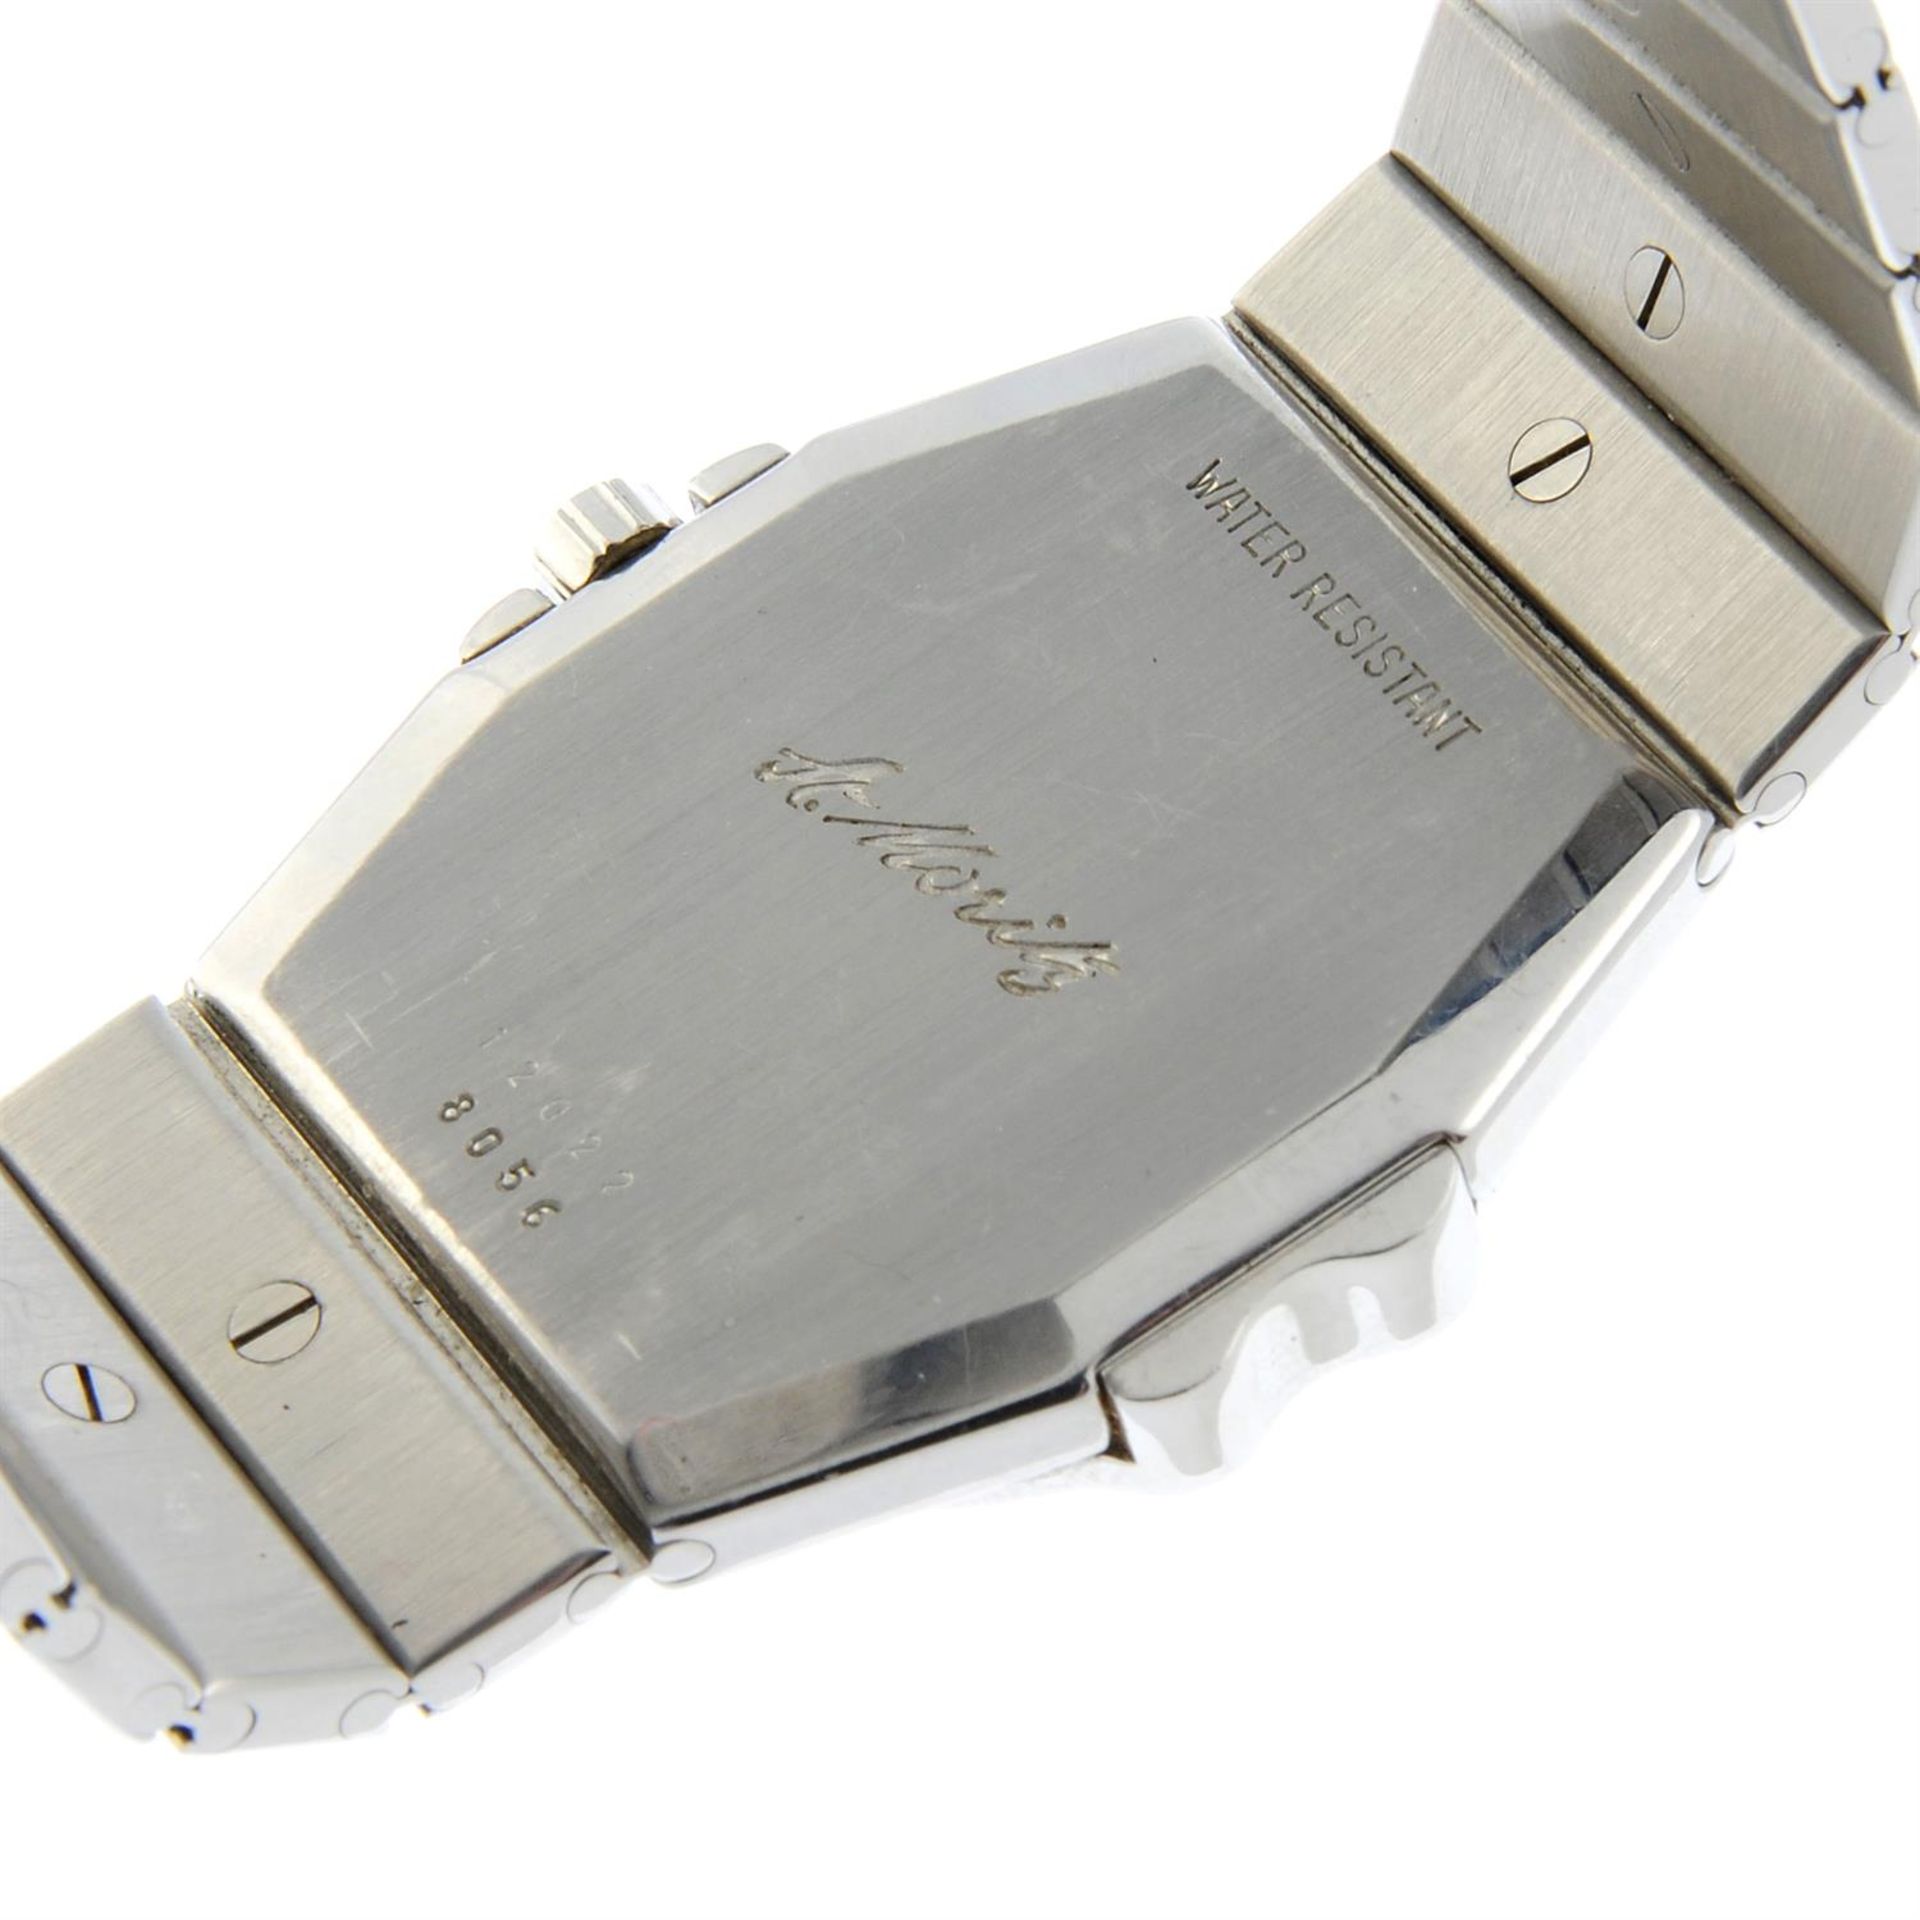 CHOPARD - a stainless steel St. Moritz bracelet watch, 30mm. - Image 4 of 4